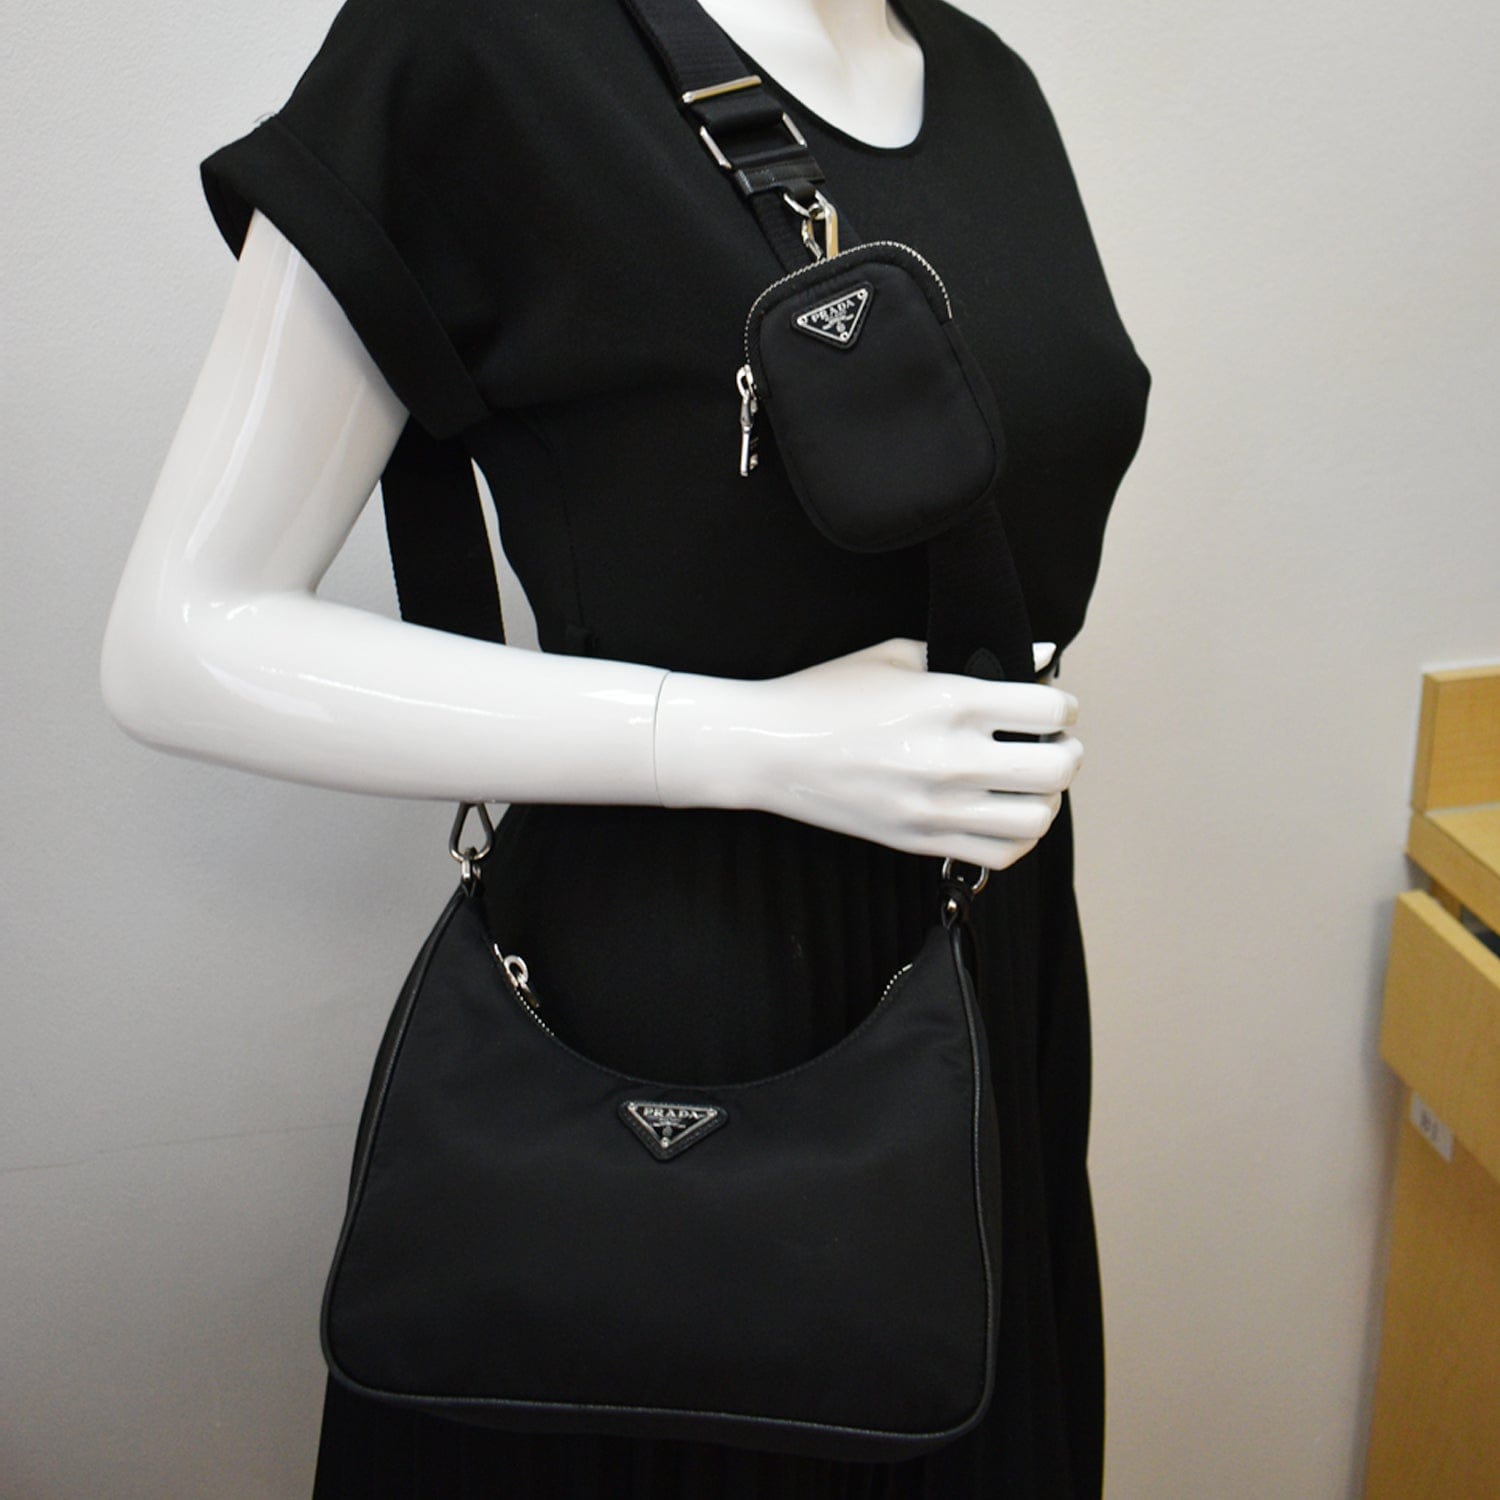 Prada Re-Edition 2005 Shoulder Bag Nylon Black/Red in Nylon with